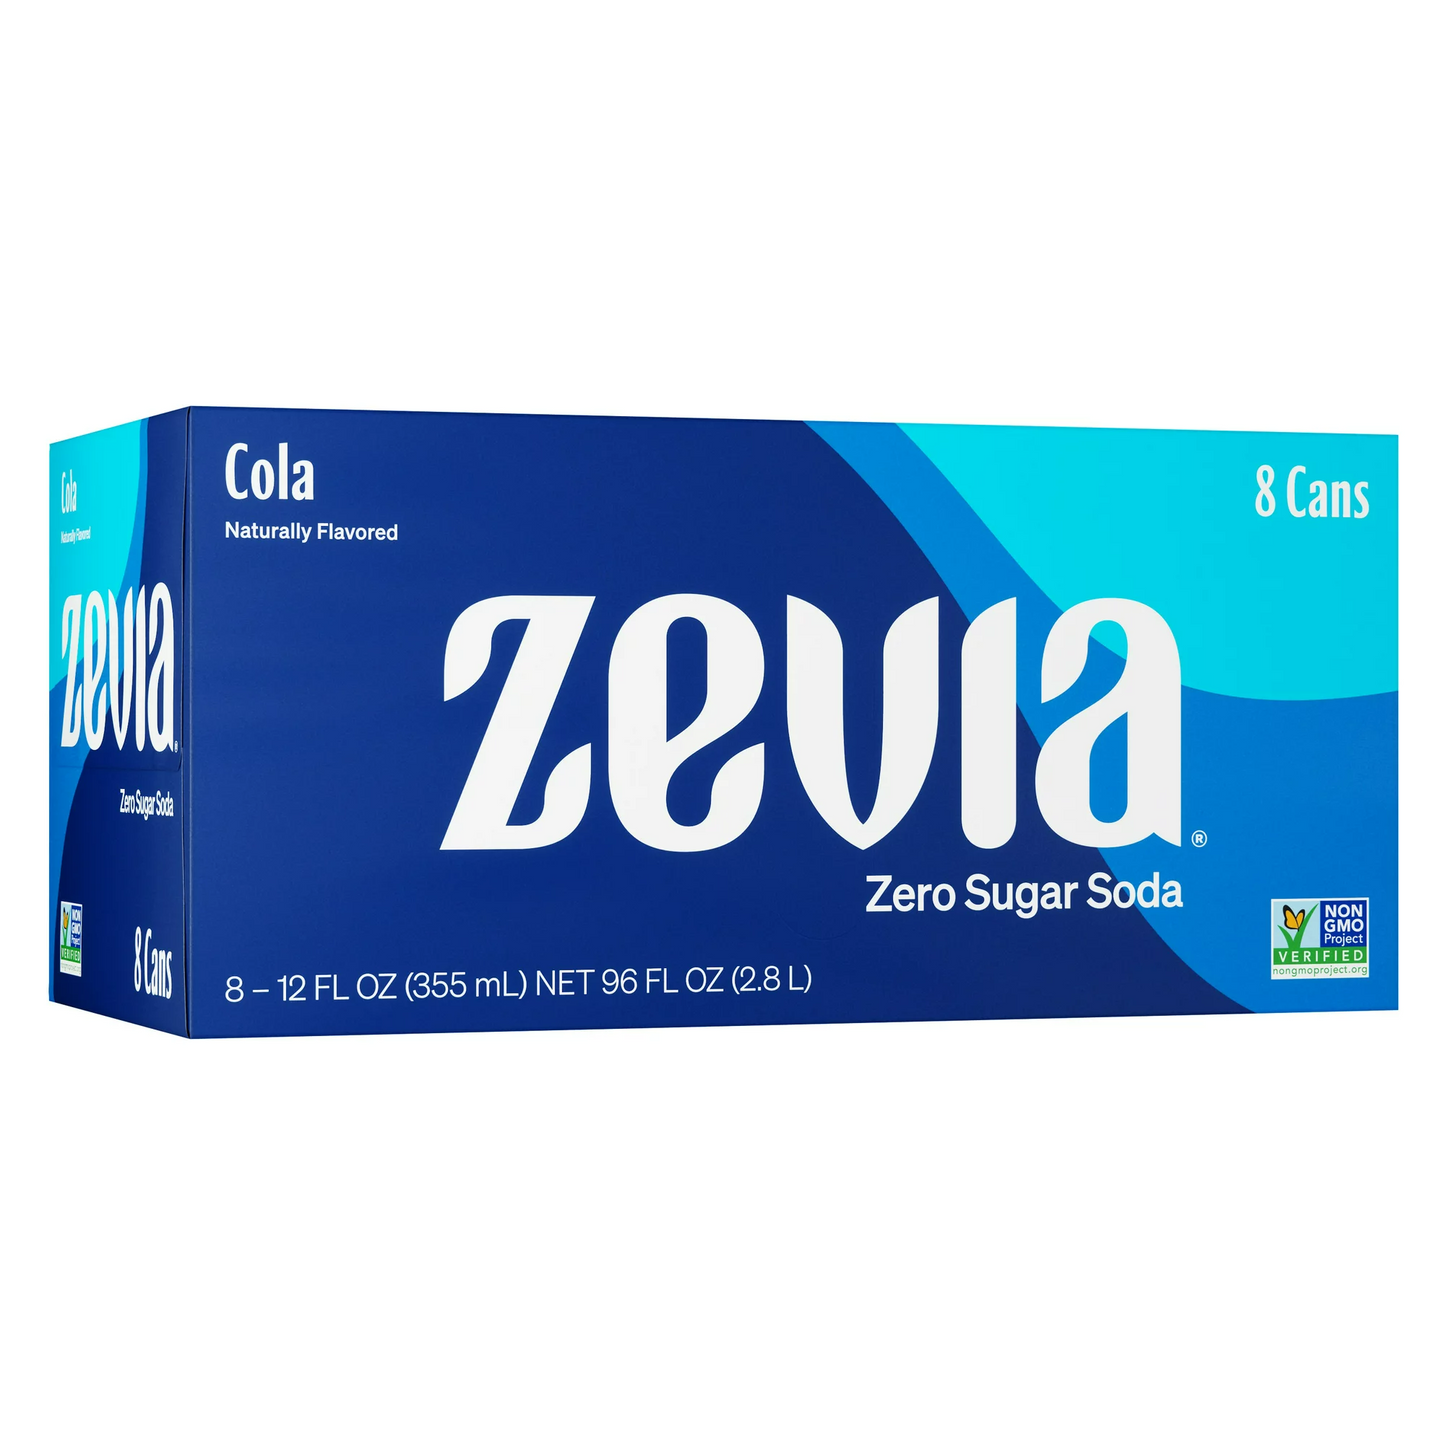 Zevia Cola Zero Calorie Soda - 8pk/12 fl oz Cans